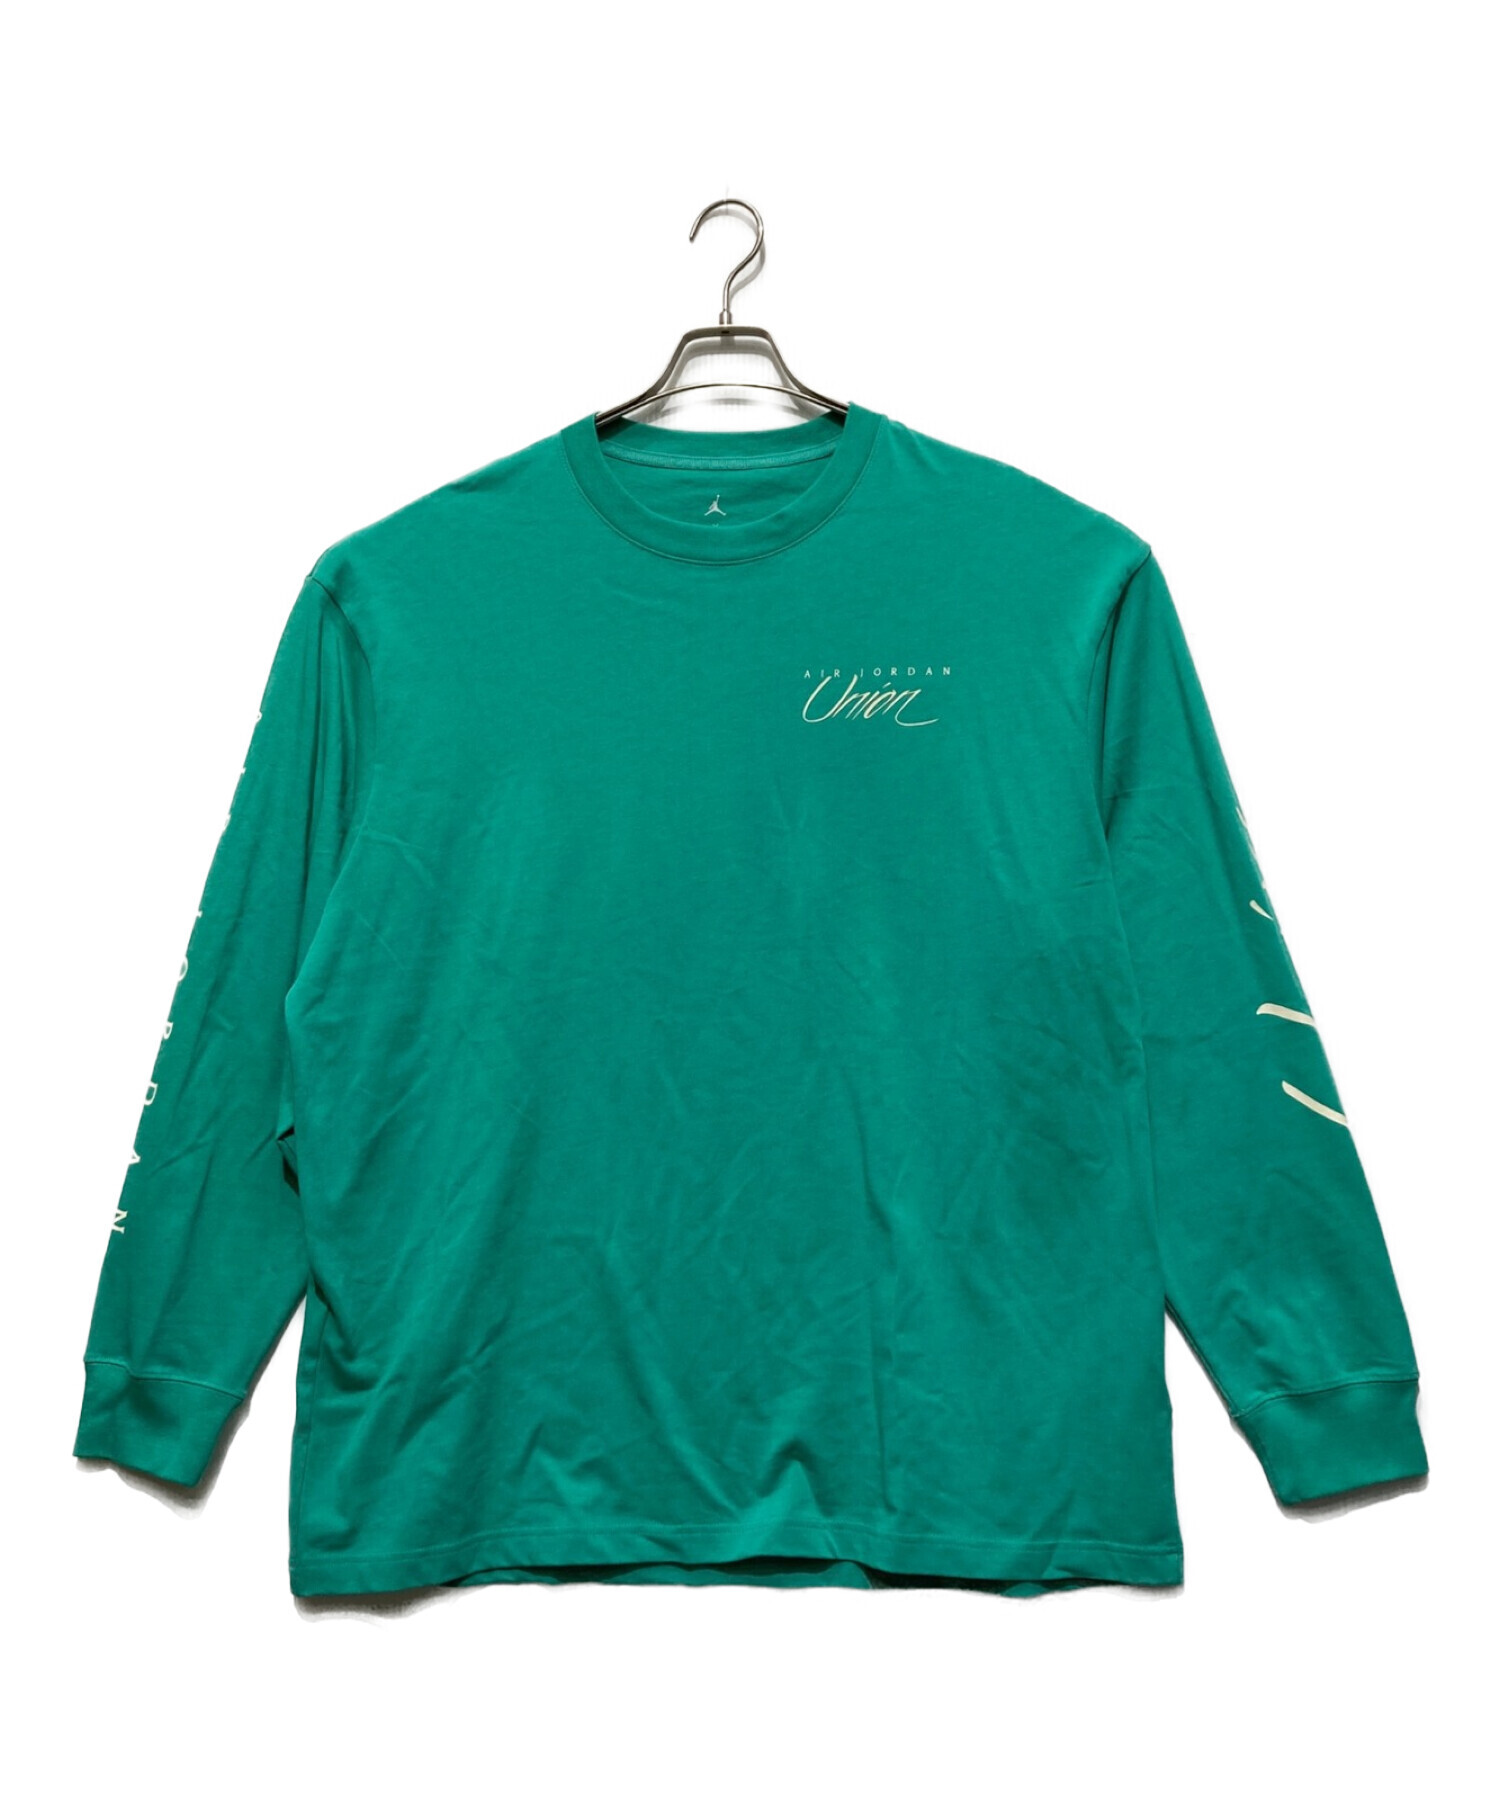 Jordan x Union (ジョーダン ユニオン) Longsleeve T-Shirt グリーン サイズ:SIZE XL